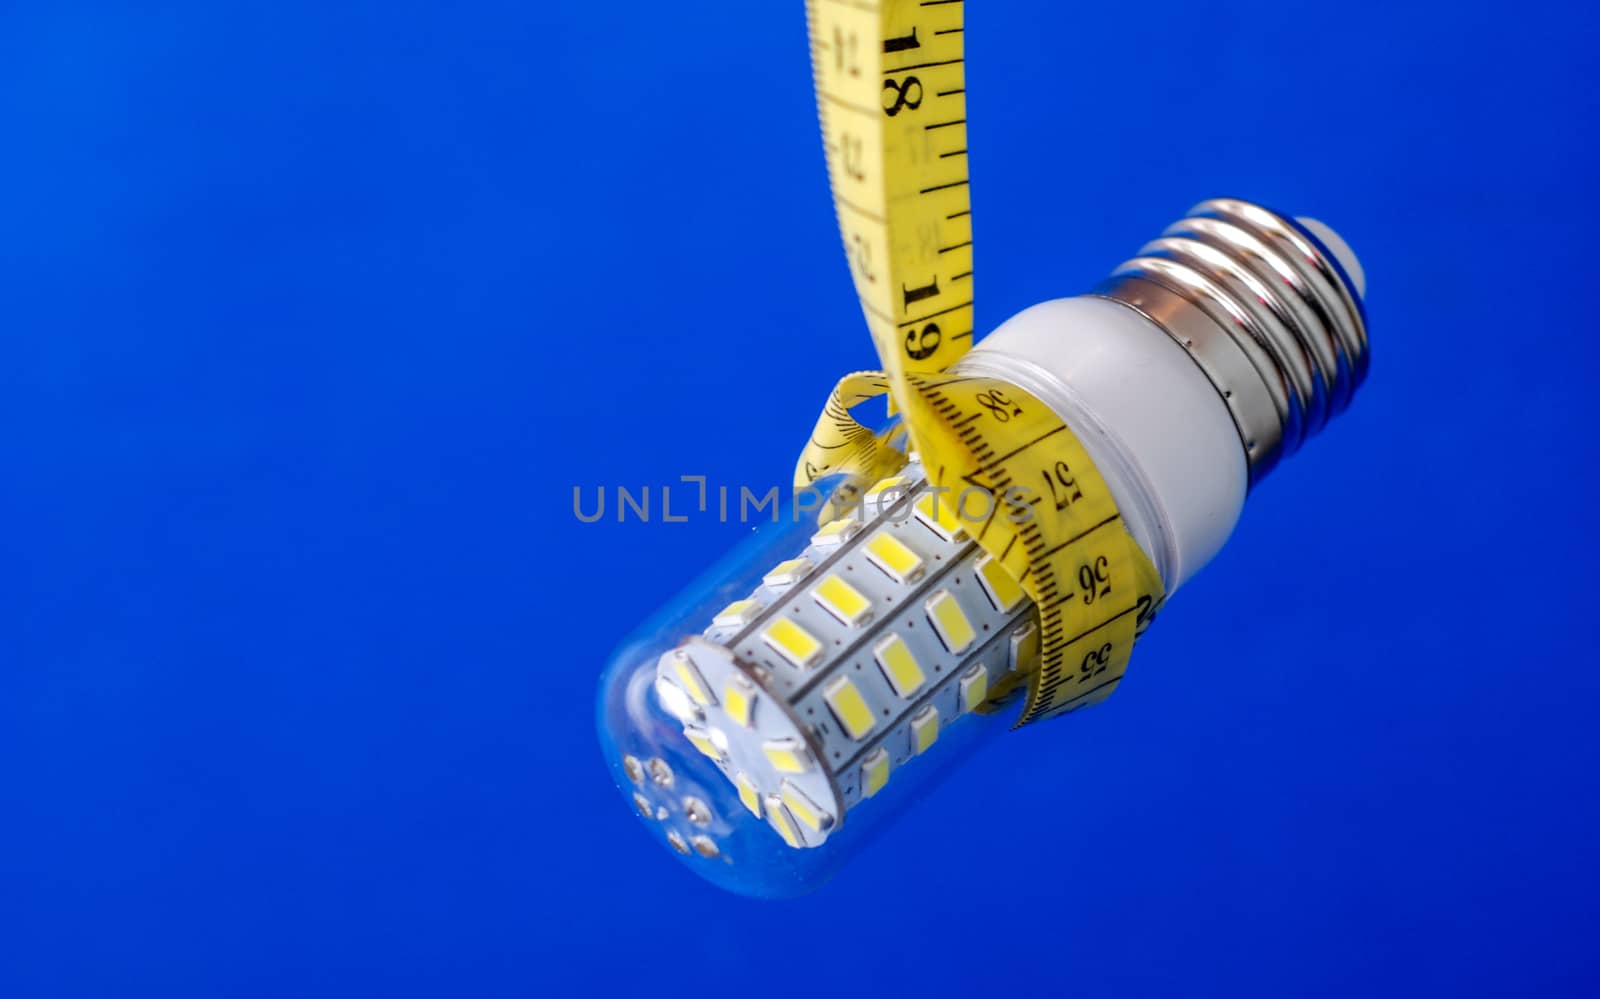  Energy saving LED light bulb  by nehru